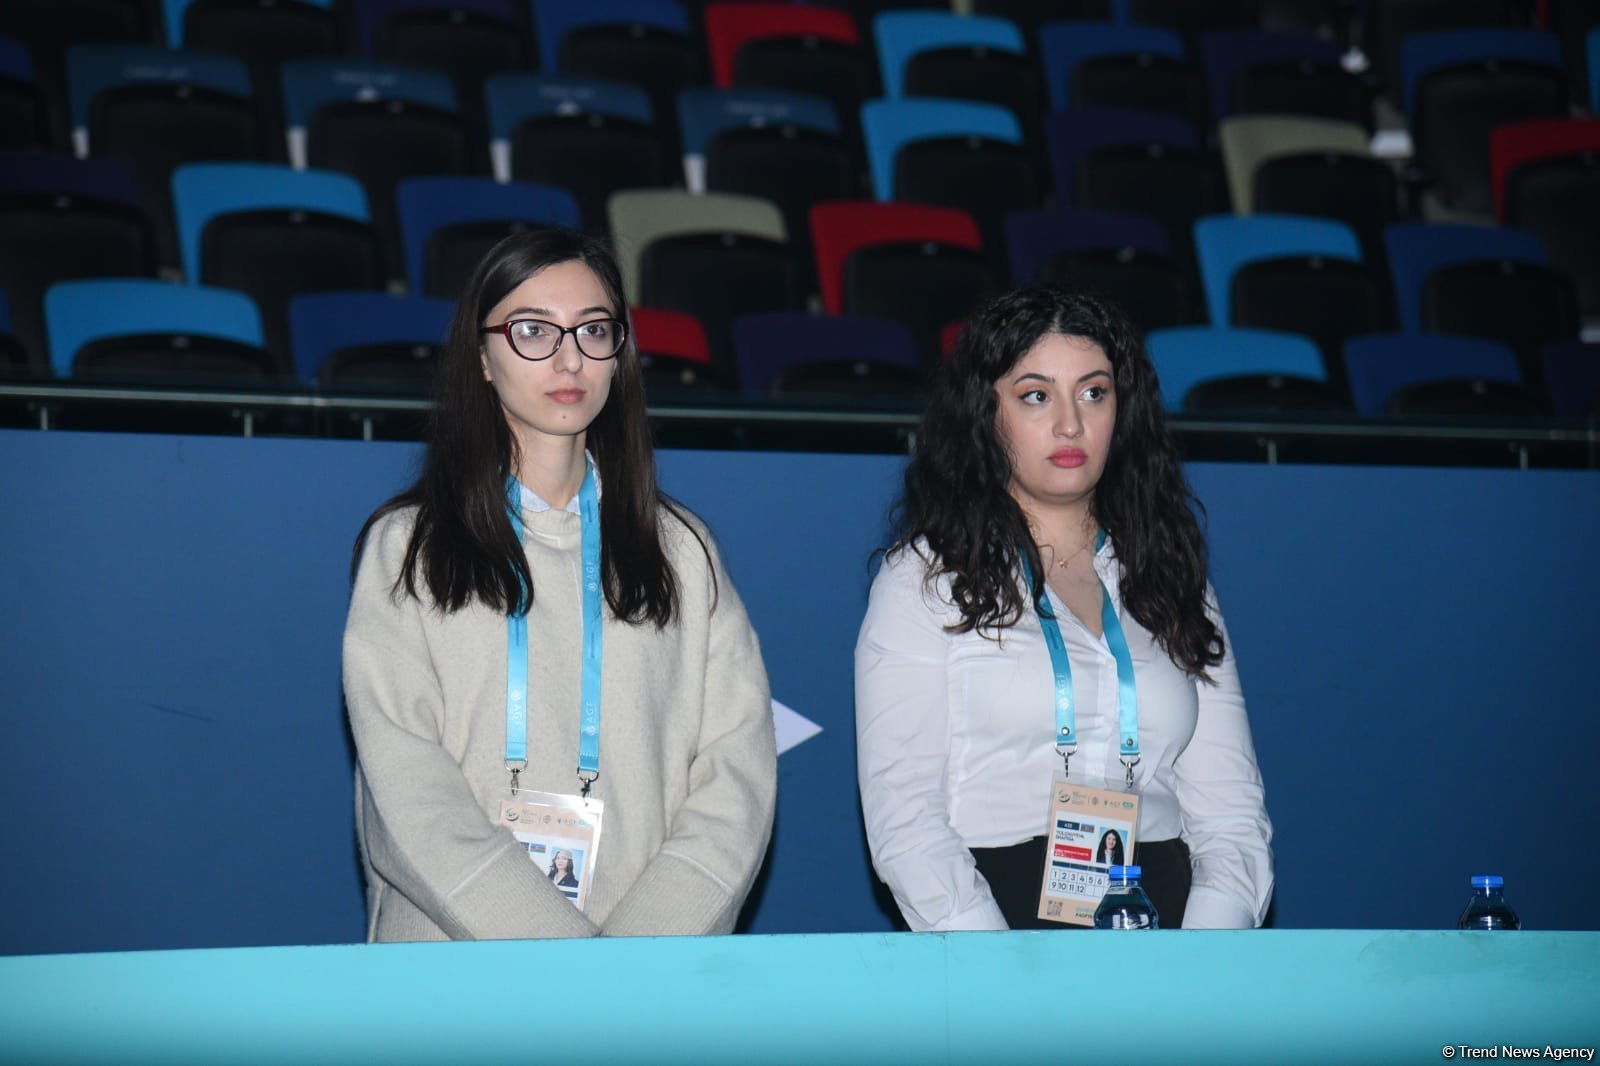 Azerbaijan's Baku opens FIG Artistic Gymnastics World Cup (PHOTO)